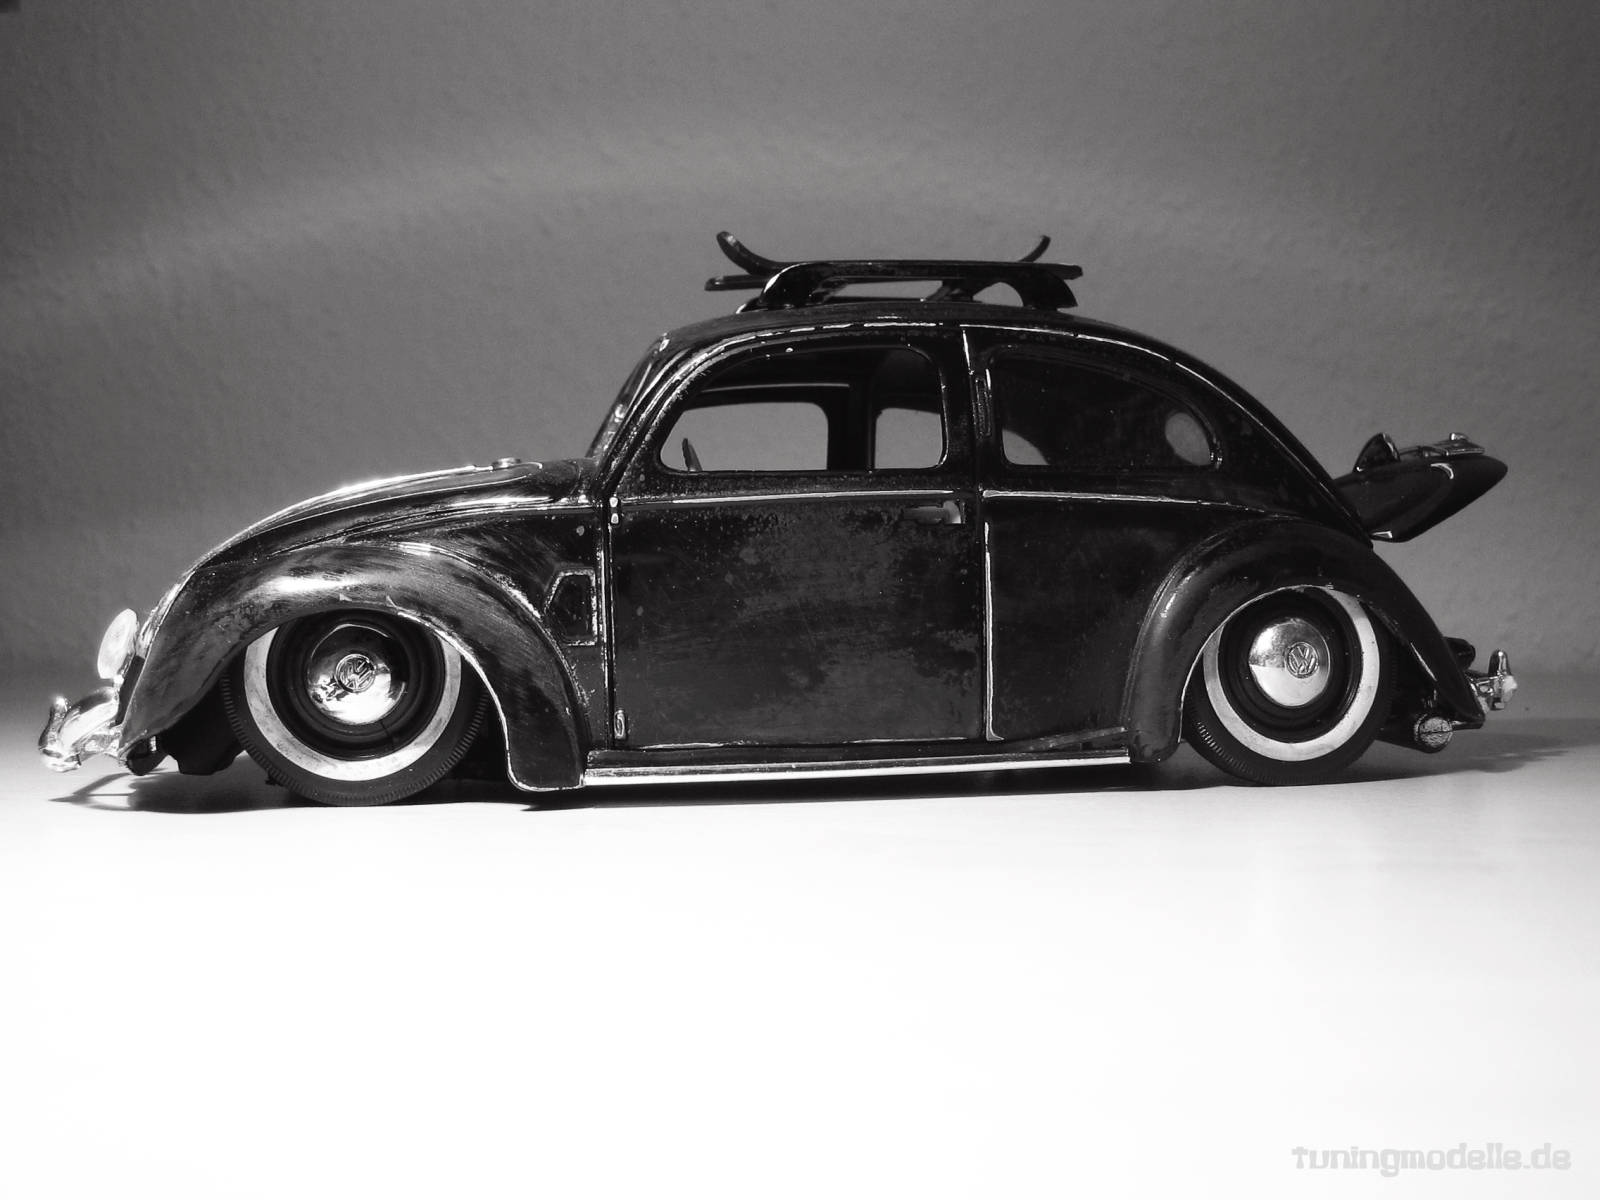 Wallpaper VW auf Tuningmodellede